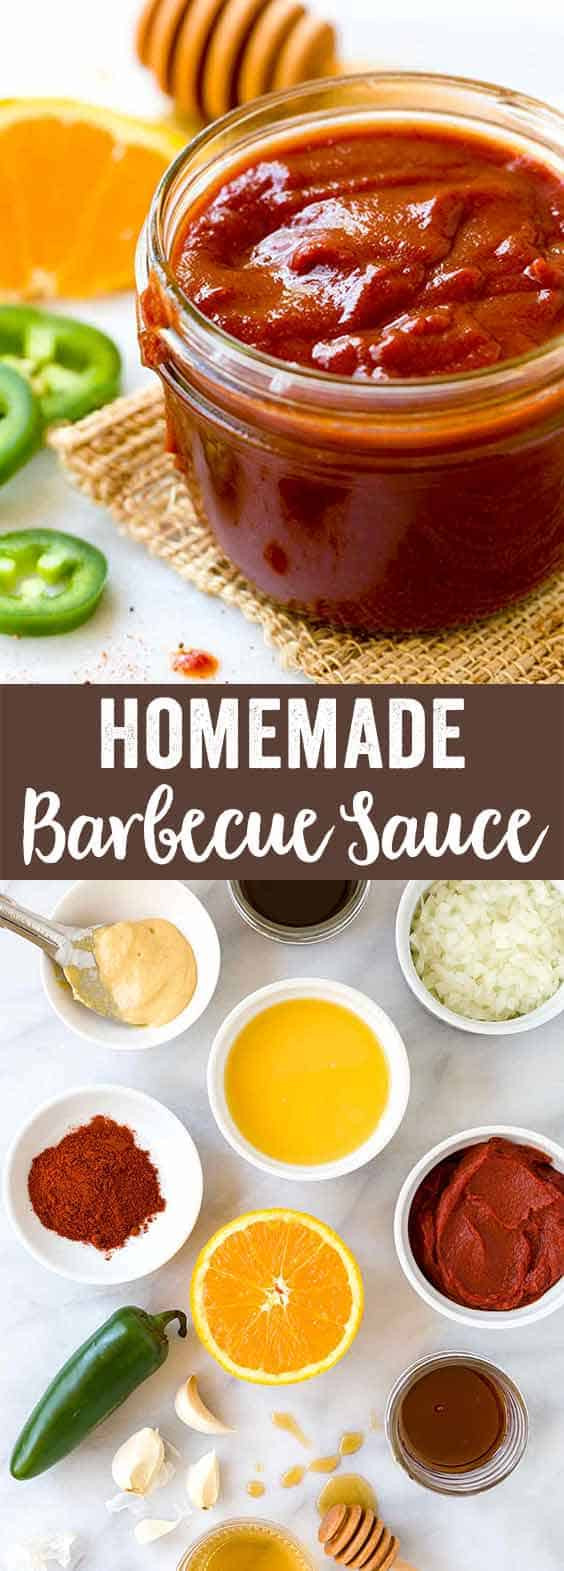 Hot Bbq Sauce Recipe
 Homemade Barbecue Sauce Recipe